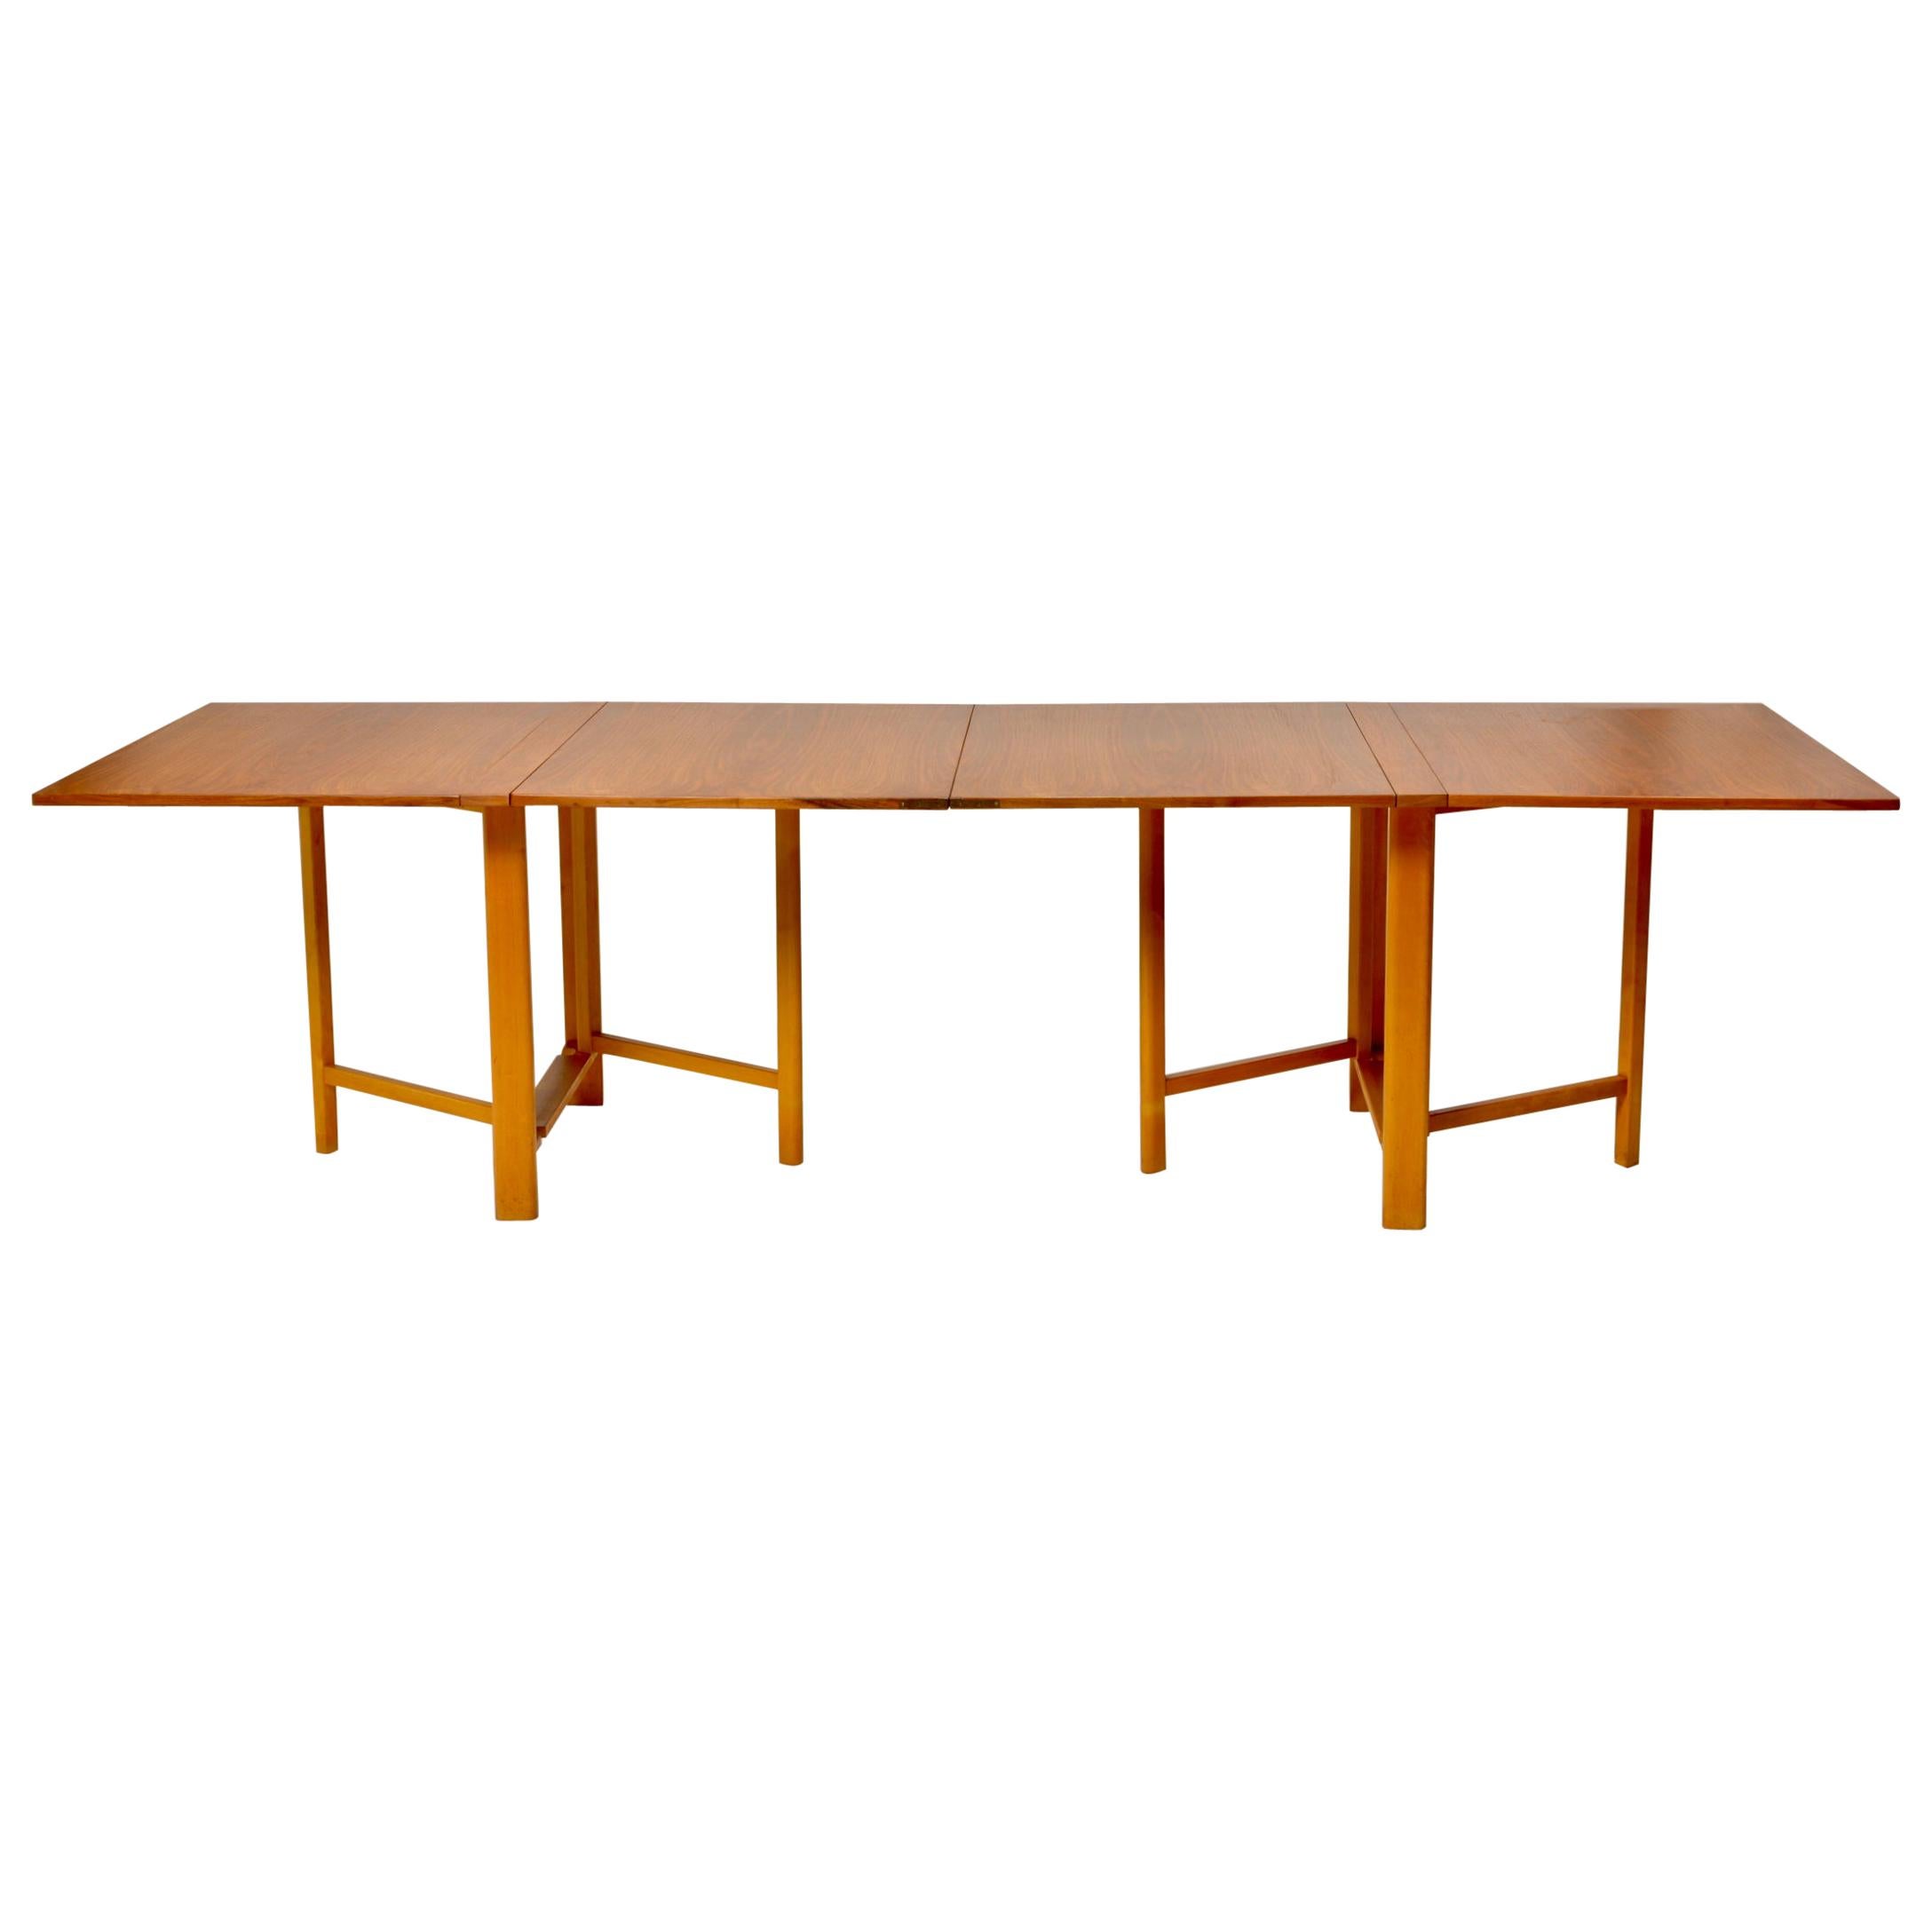 Bruno Mathsson "Maria Flap" Folding Table, Karl Mathsson, Sweden, 1950s